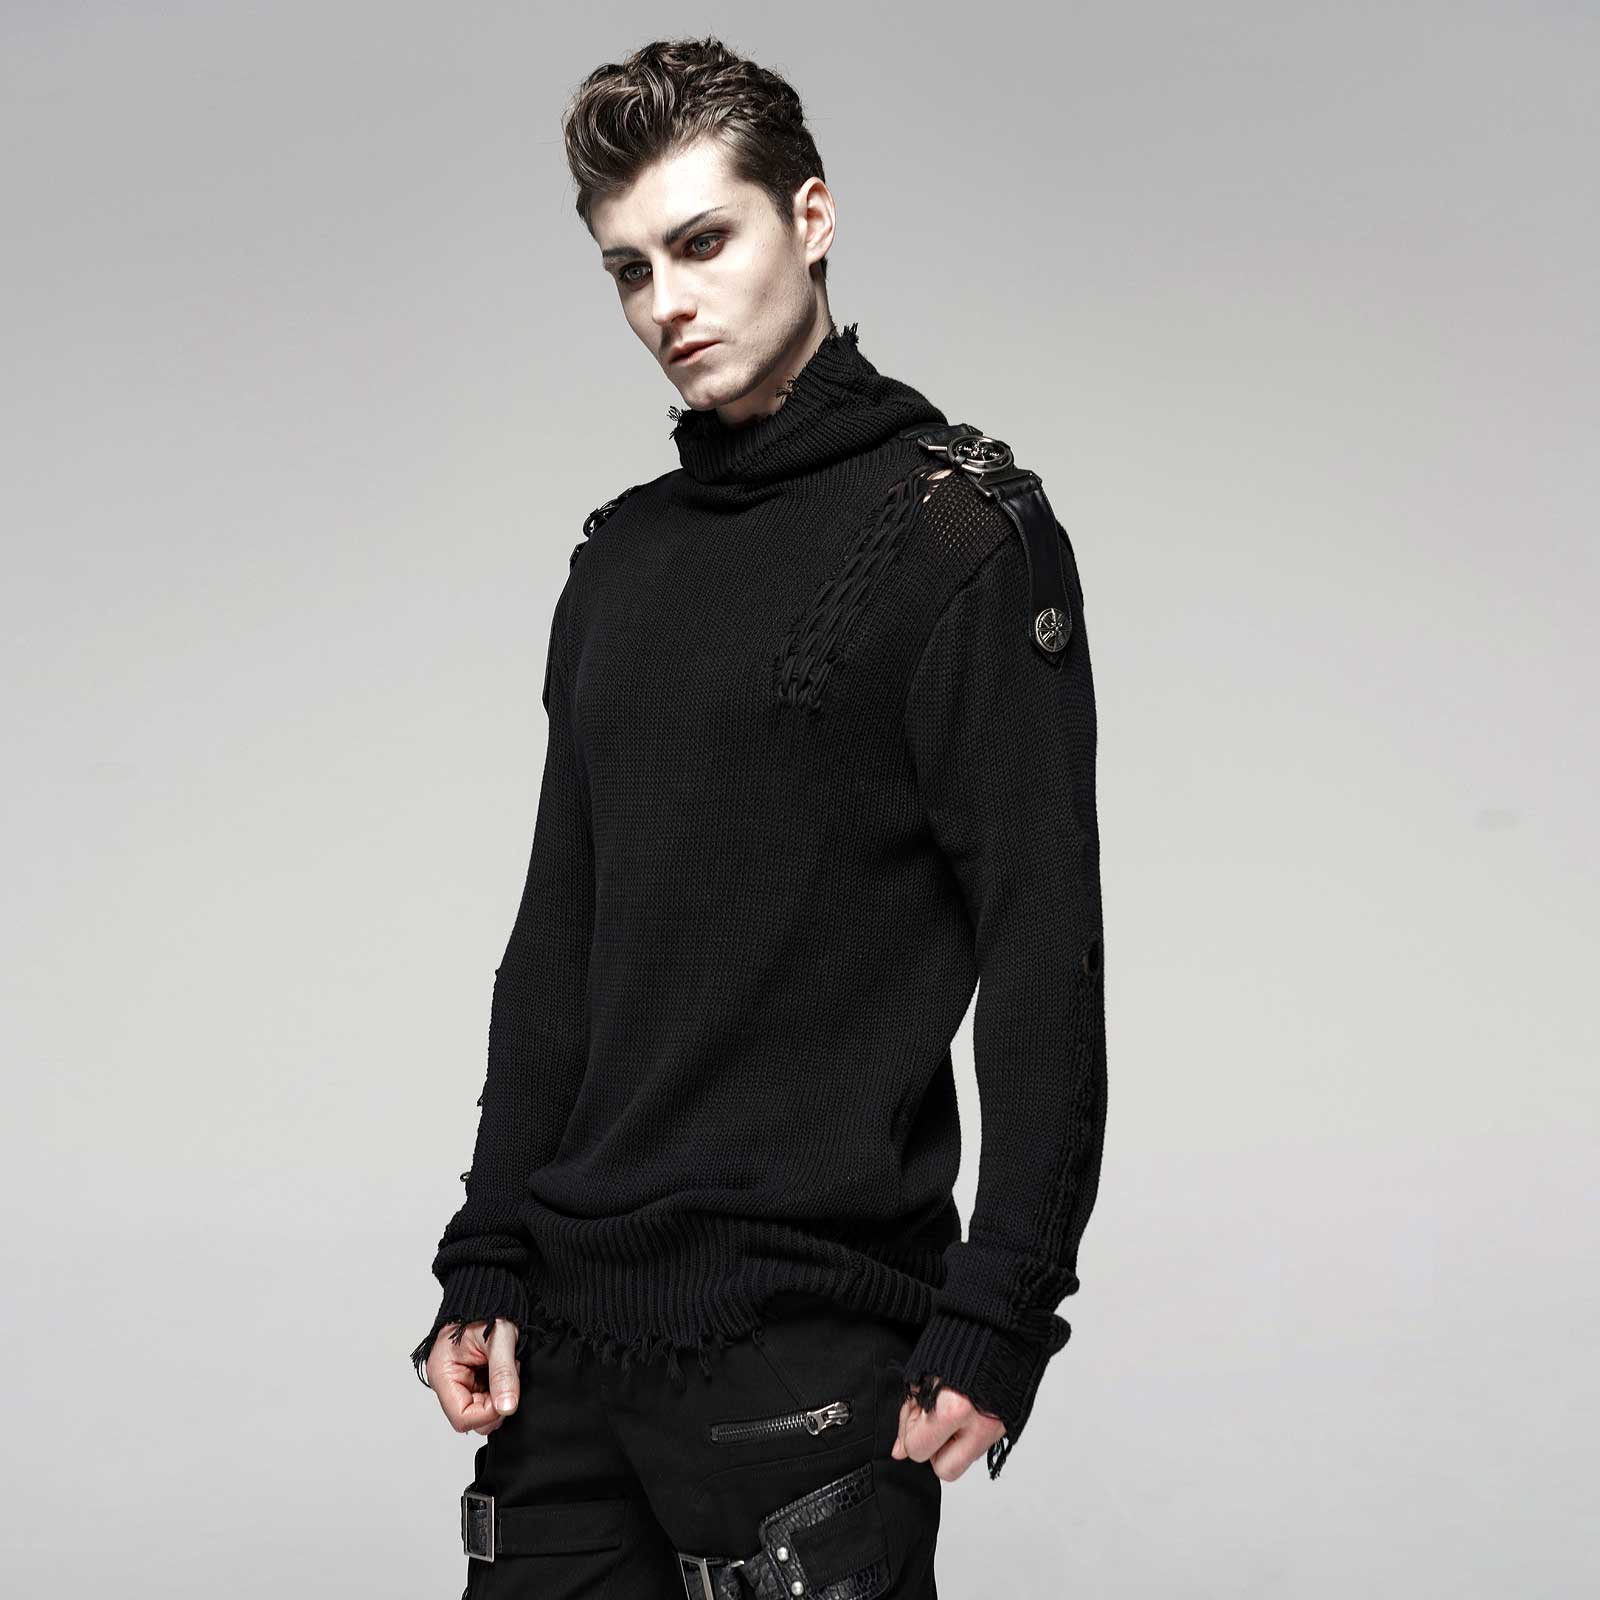 Punk Rave Skull Unit Knit Sweater Gothic Knitted Jumper Mens Black ...